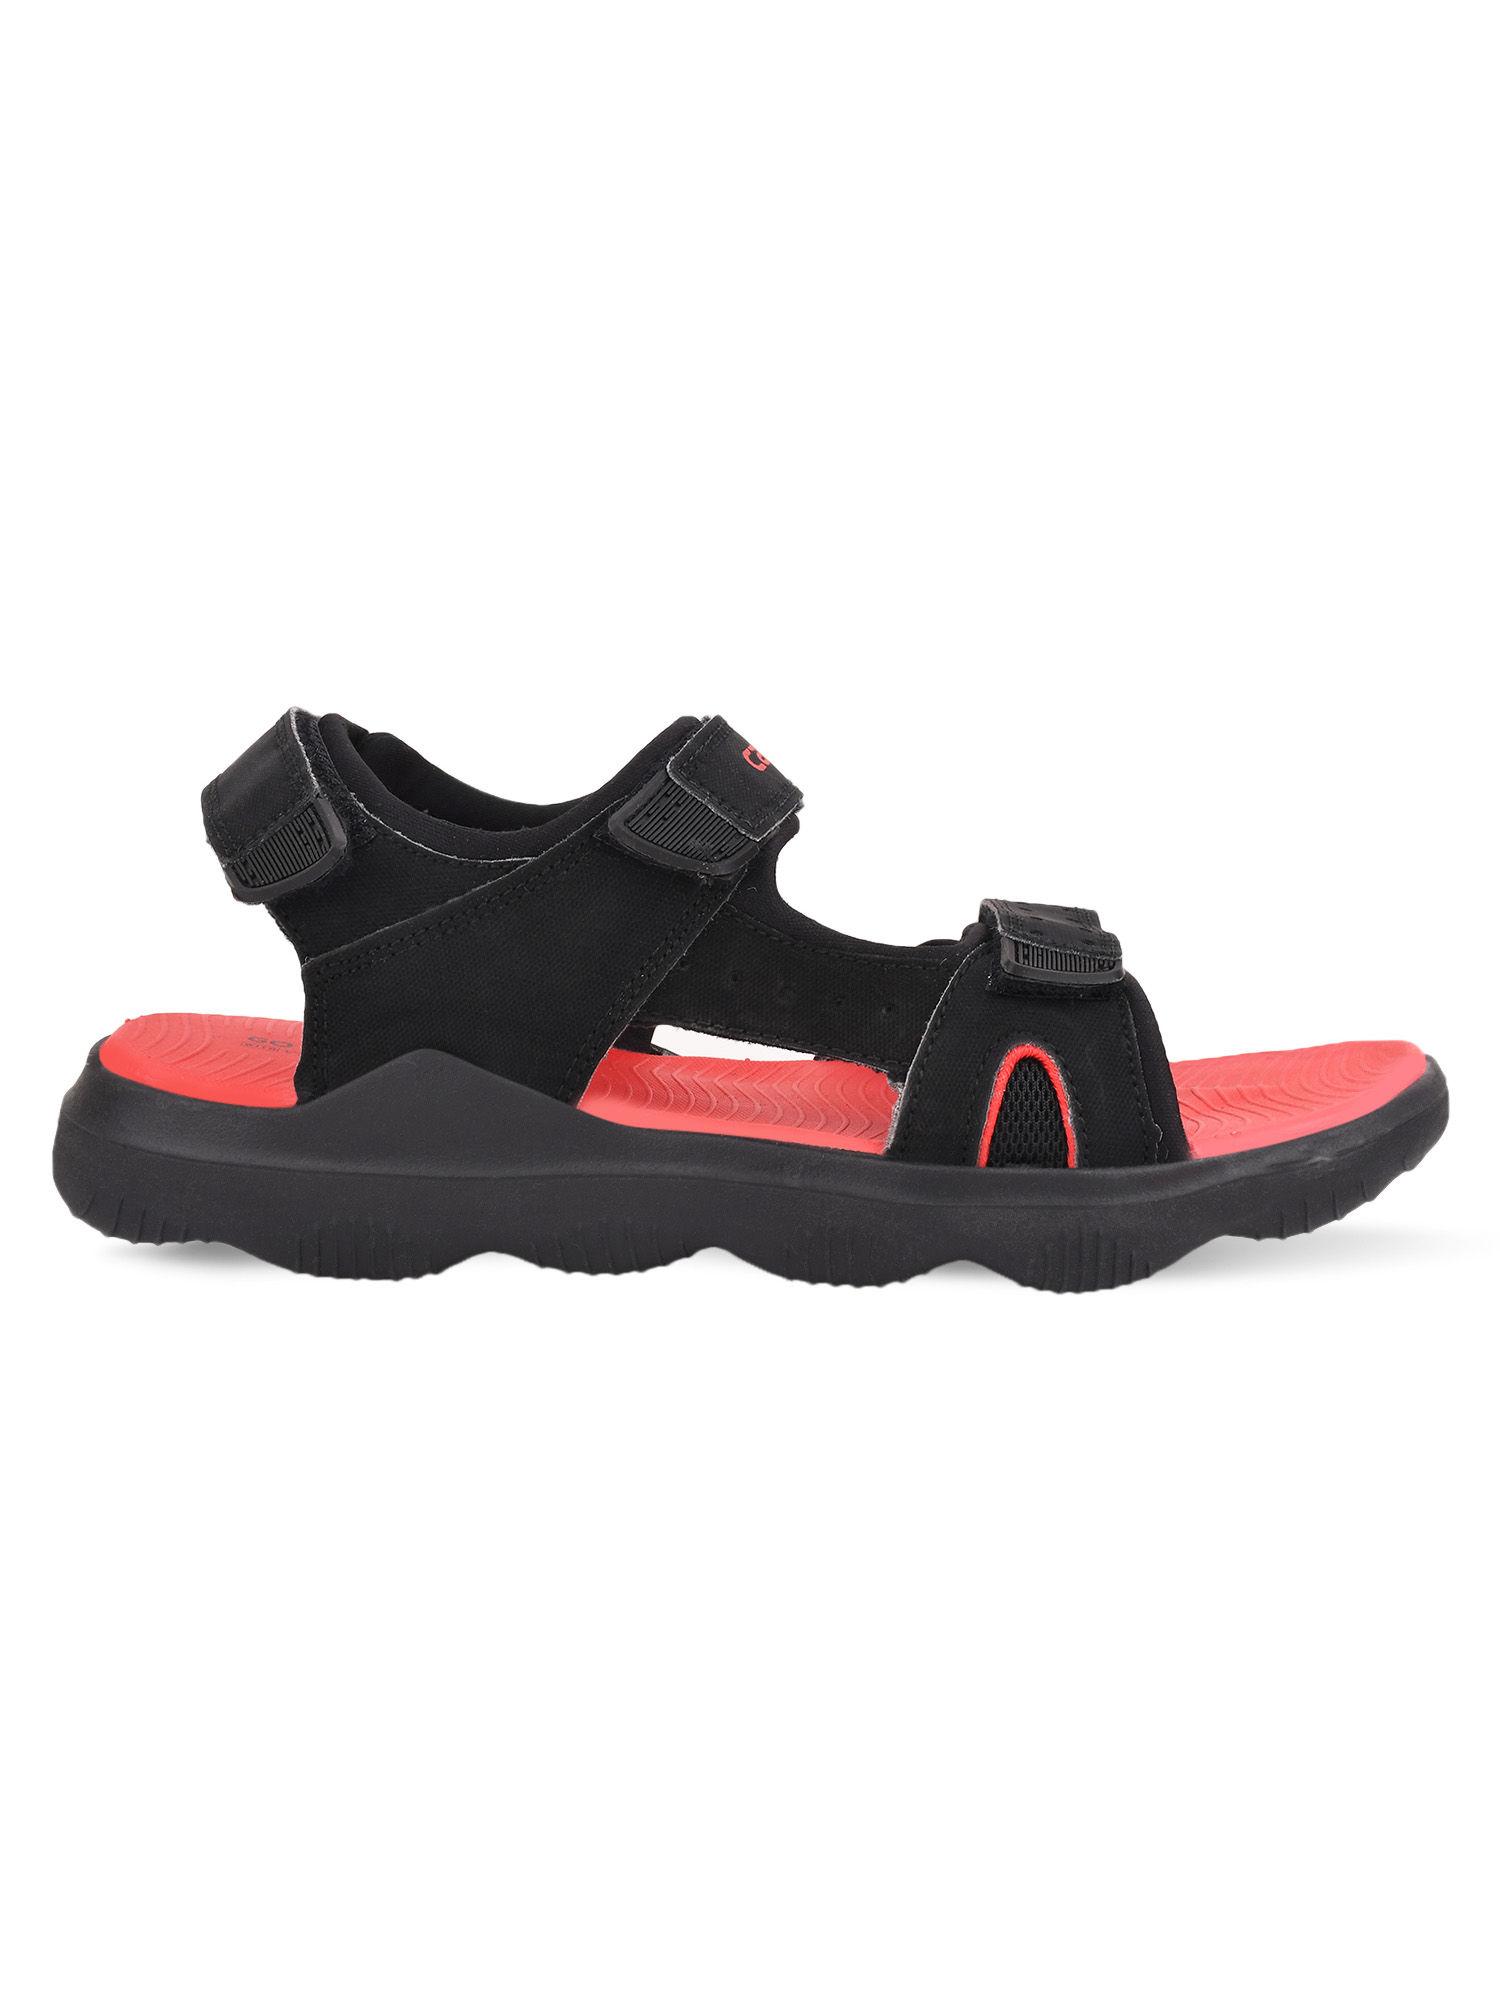 gc-2204 black men's sandals